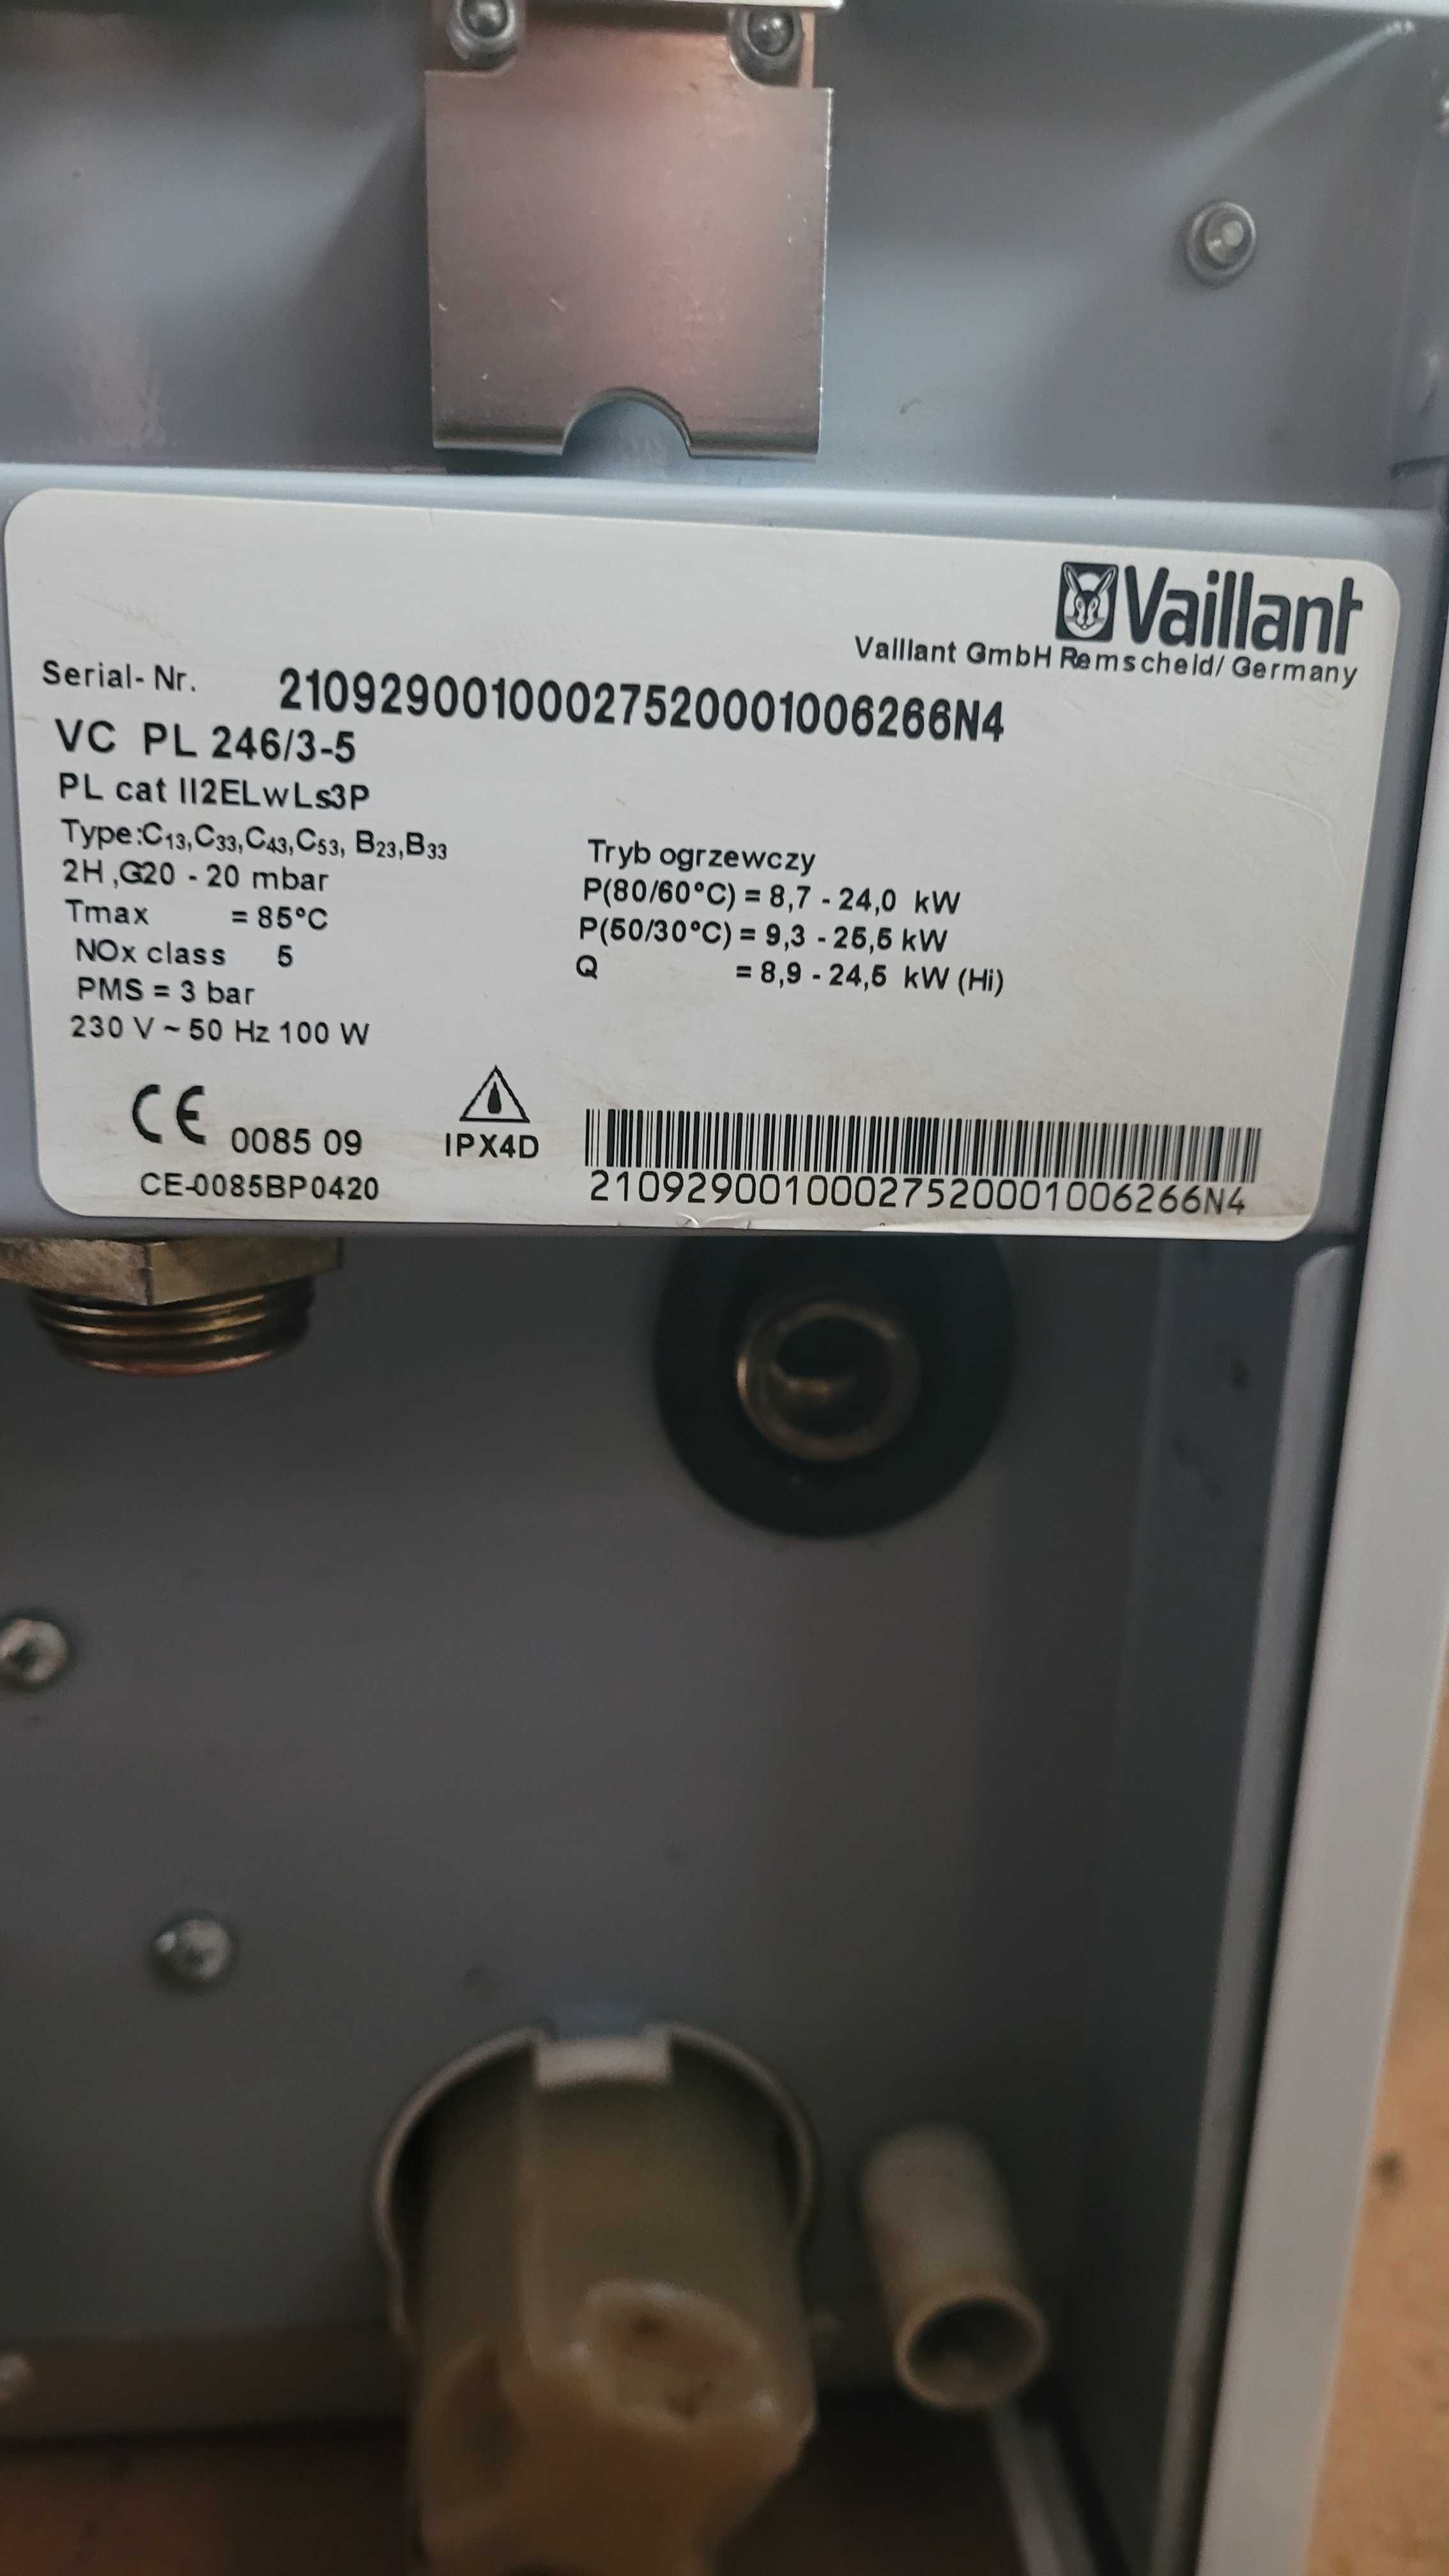 Vaillant ecoTec CV 246/5-3 z regulatorem pogodowym calorMatic 430F